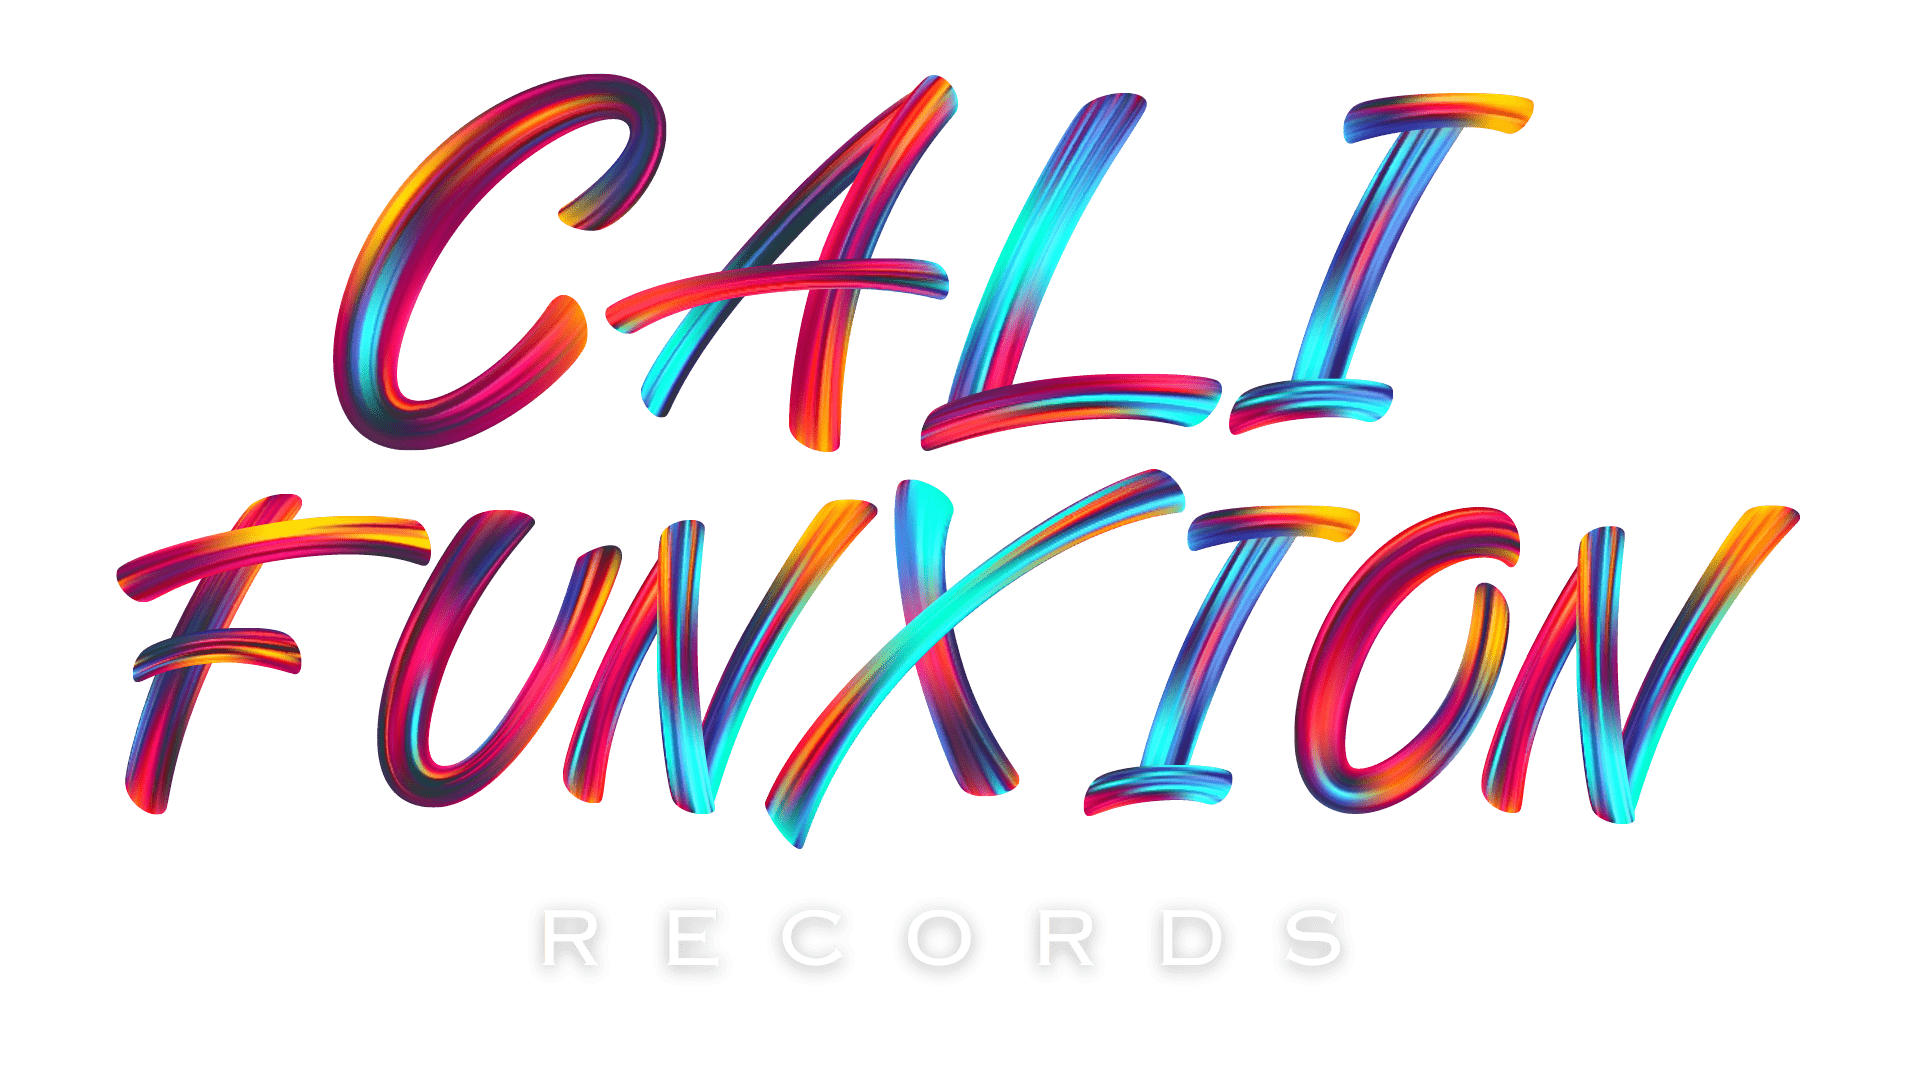 Cali Funxion Records